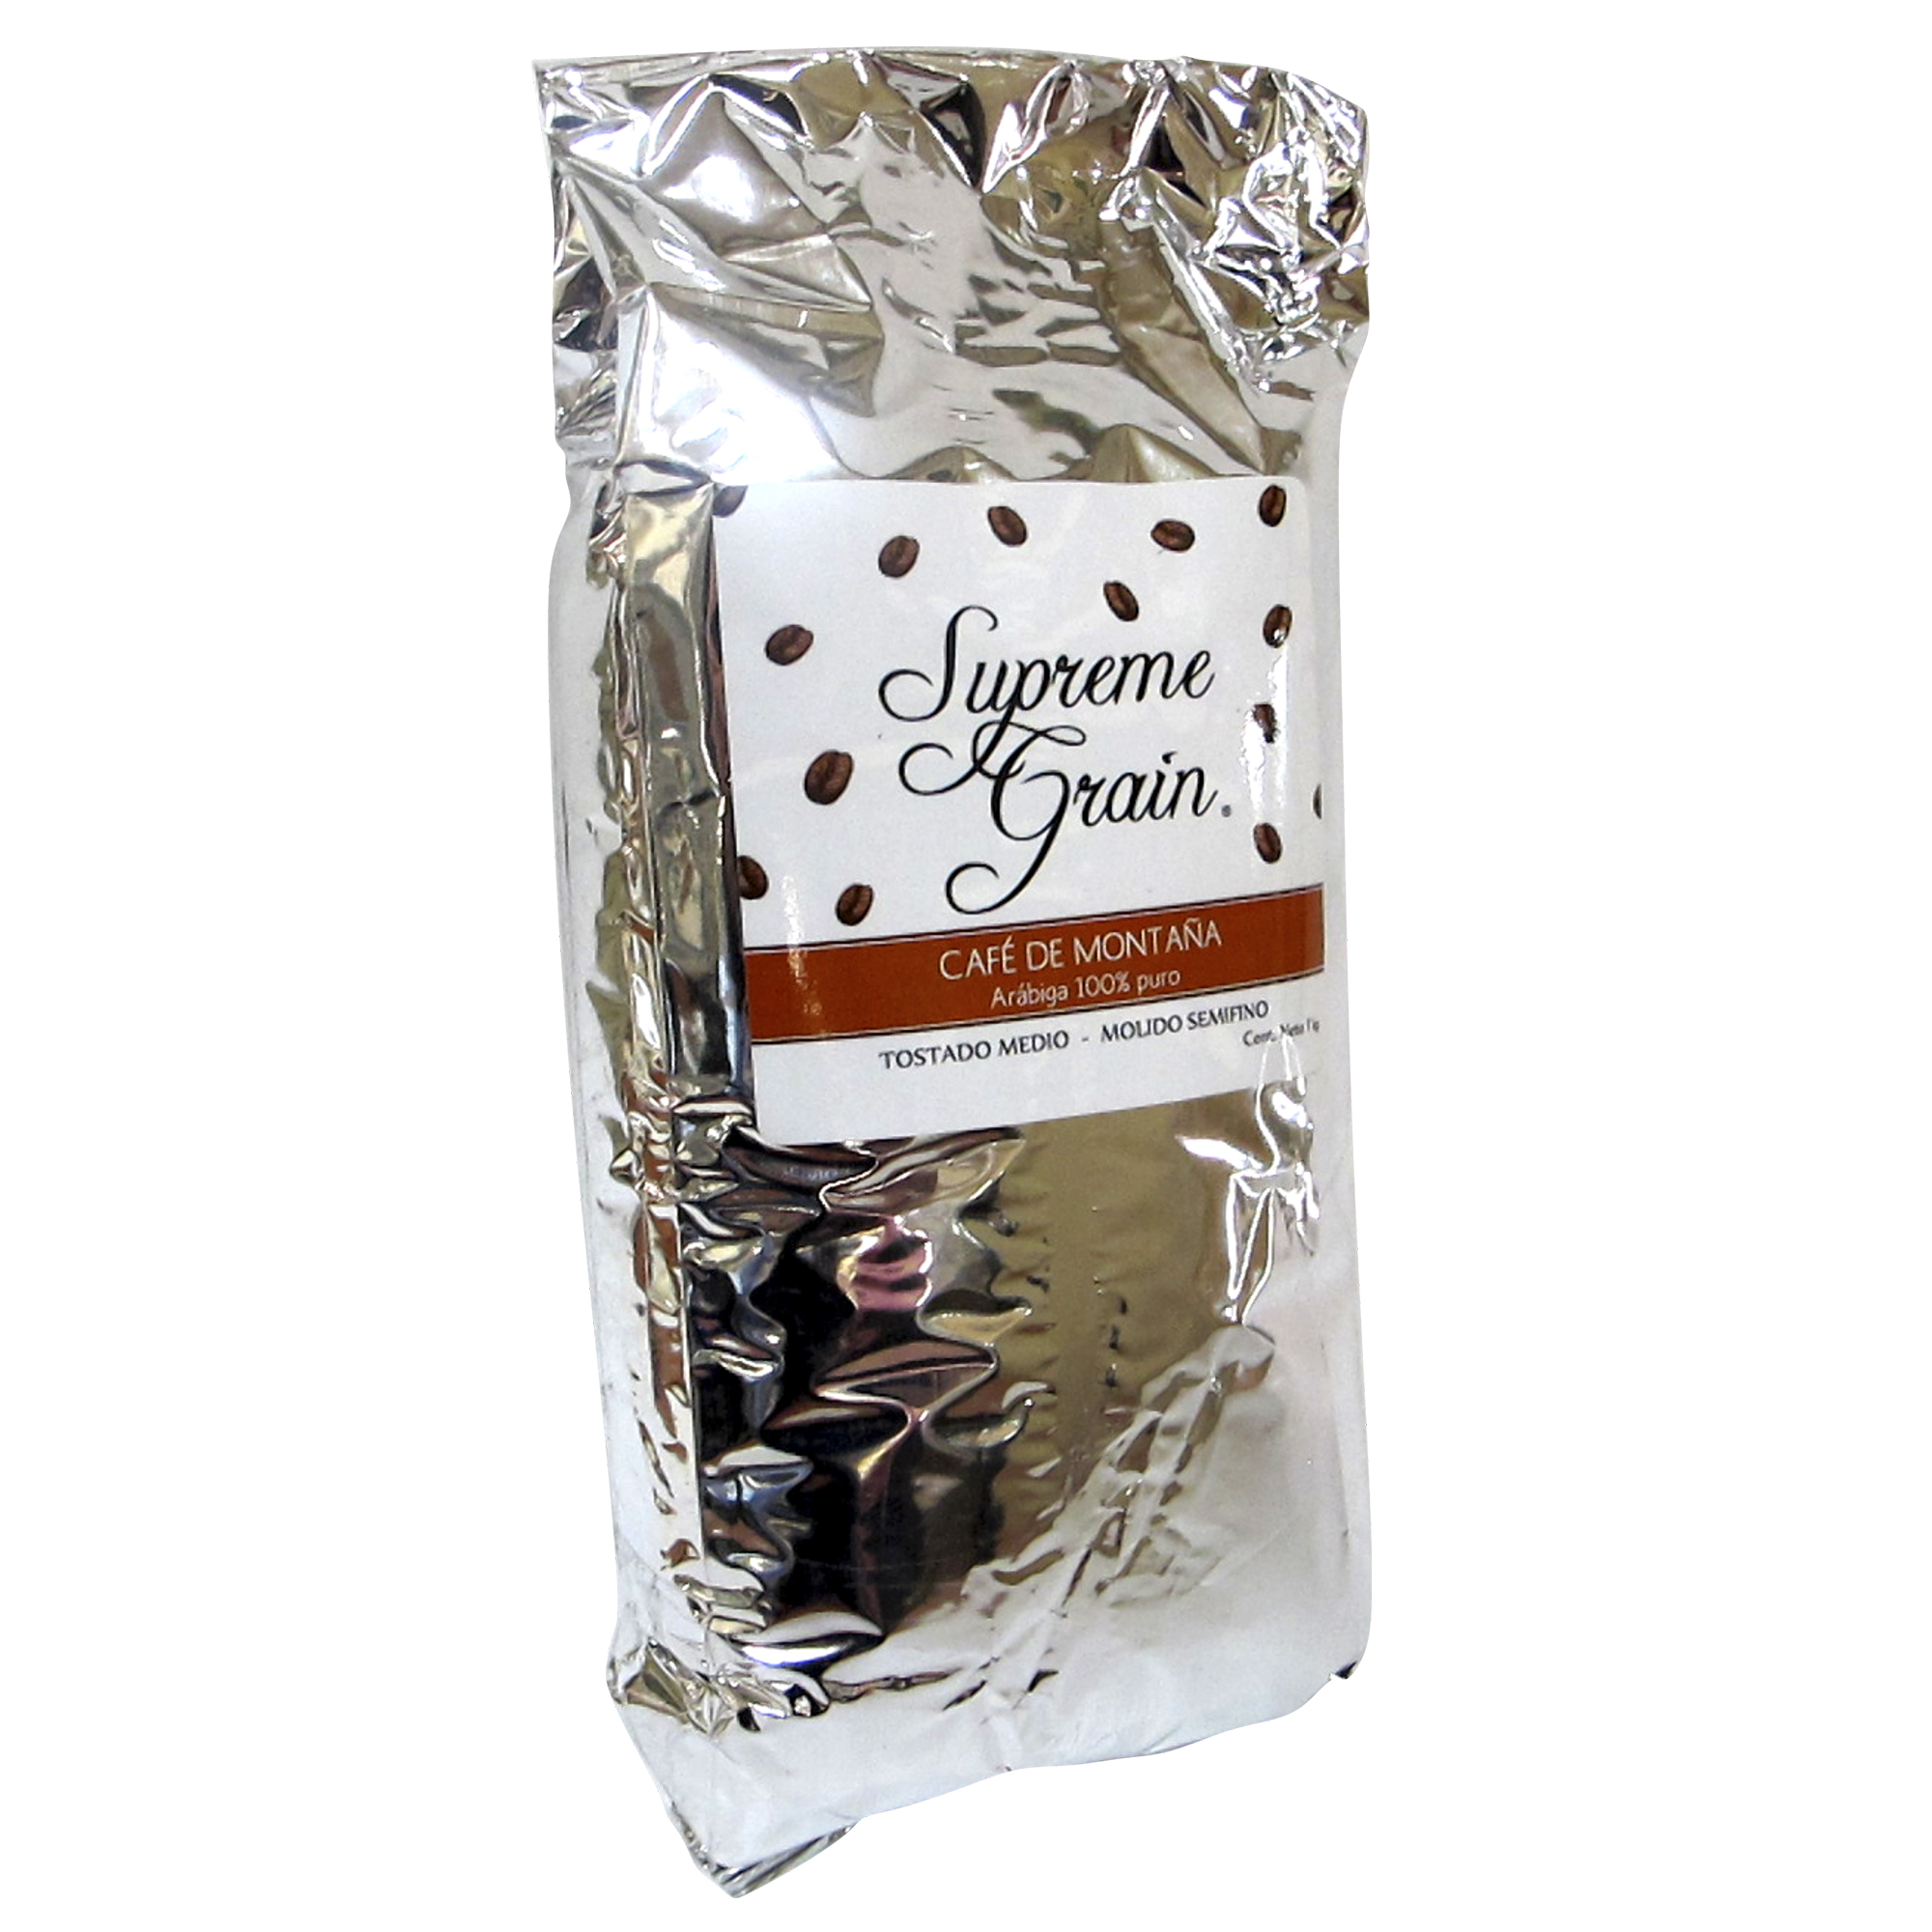 Café en paquete marca Supreme grain SG con 1 kg